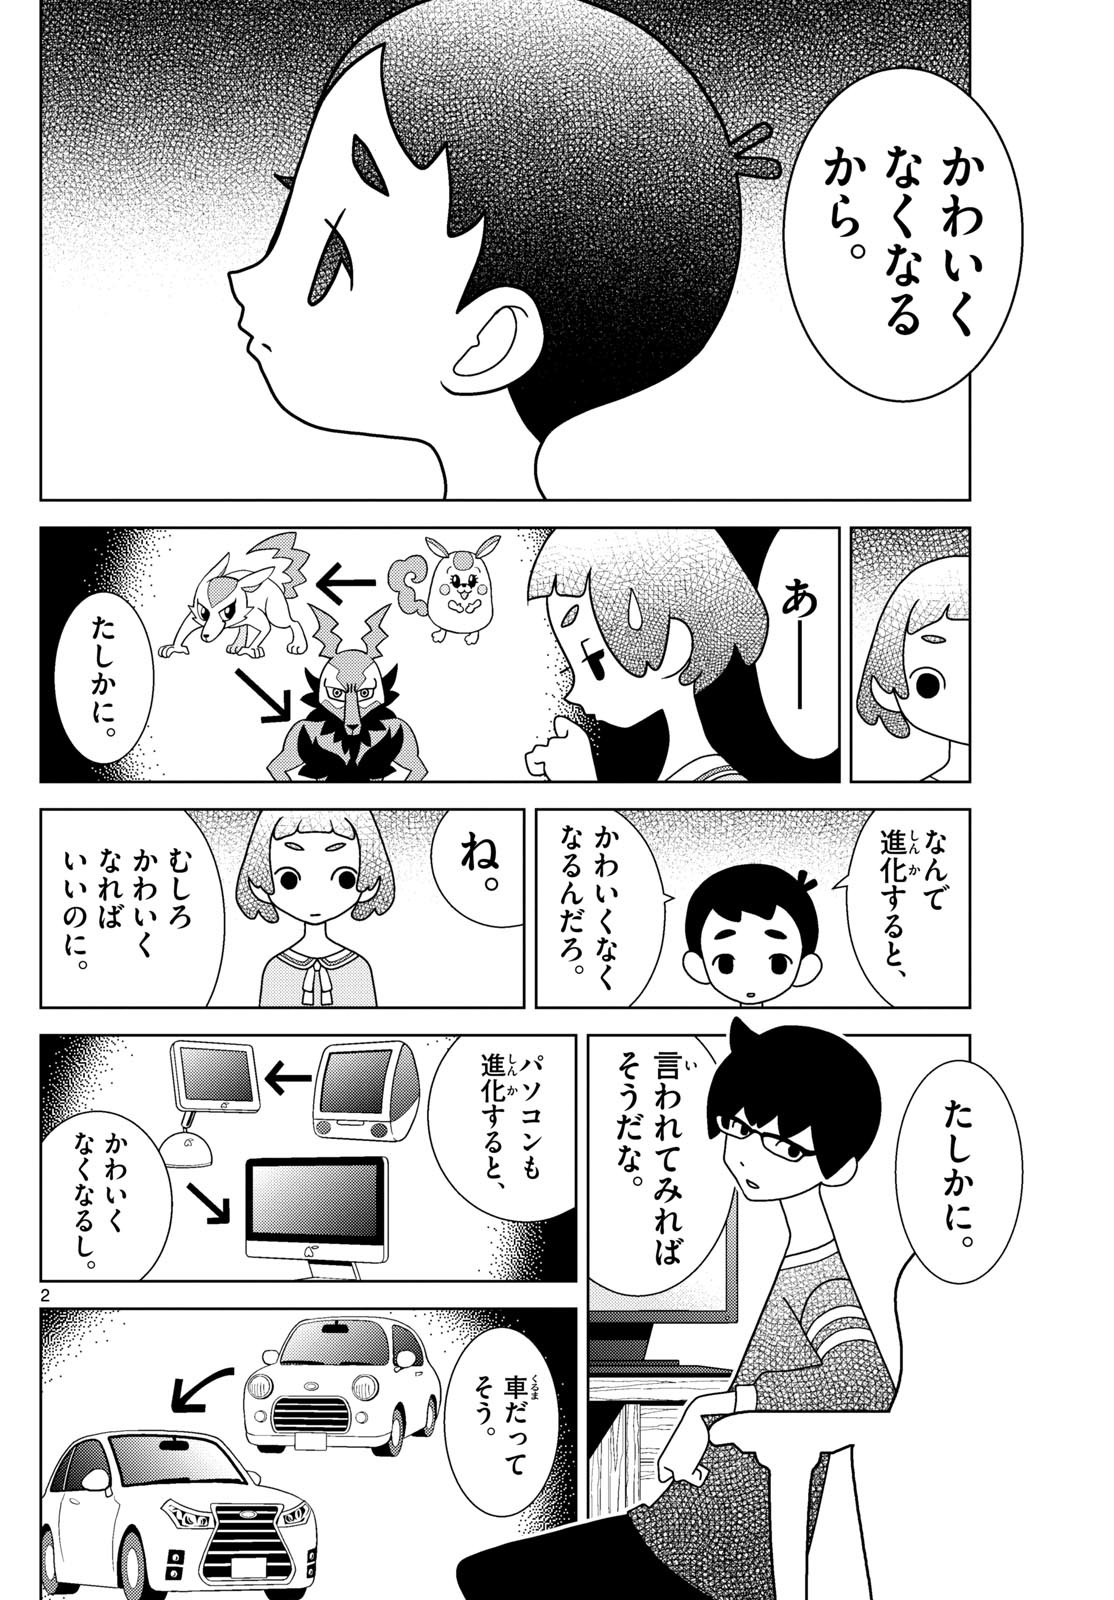 Shibuya Near Family - Chapter 077 - Page 2